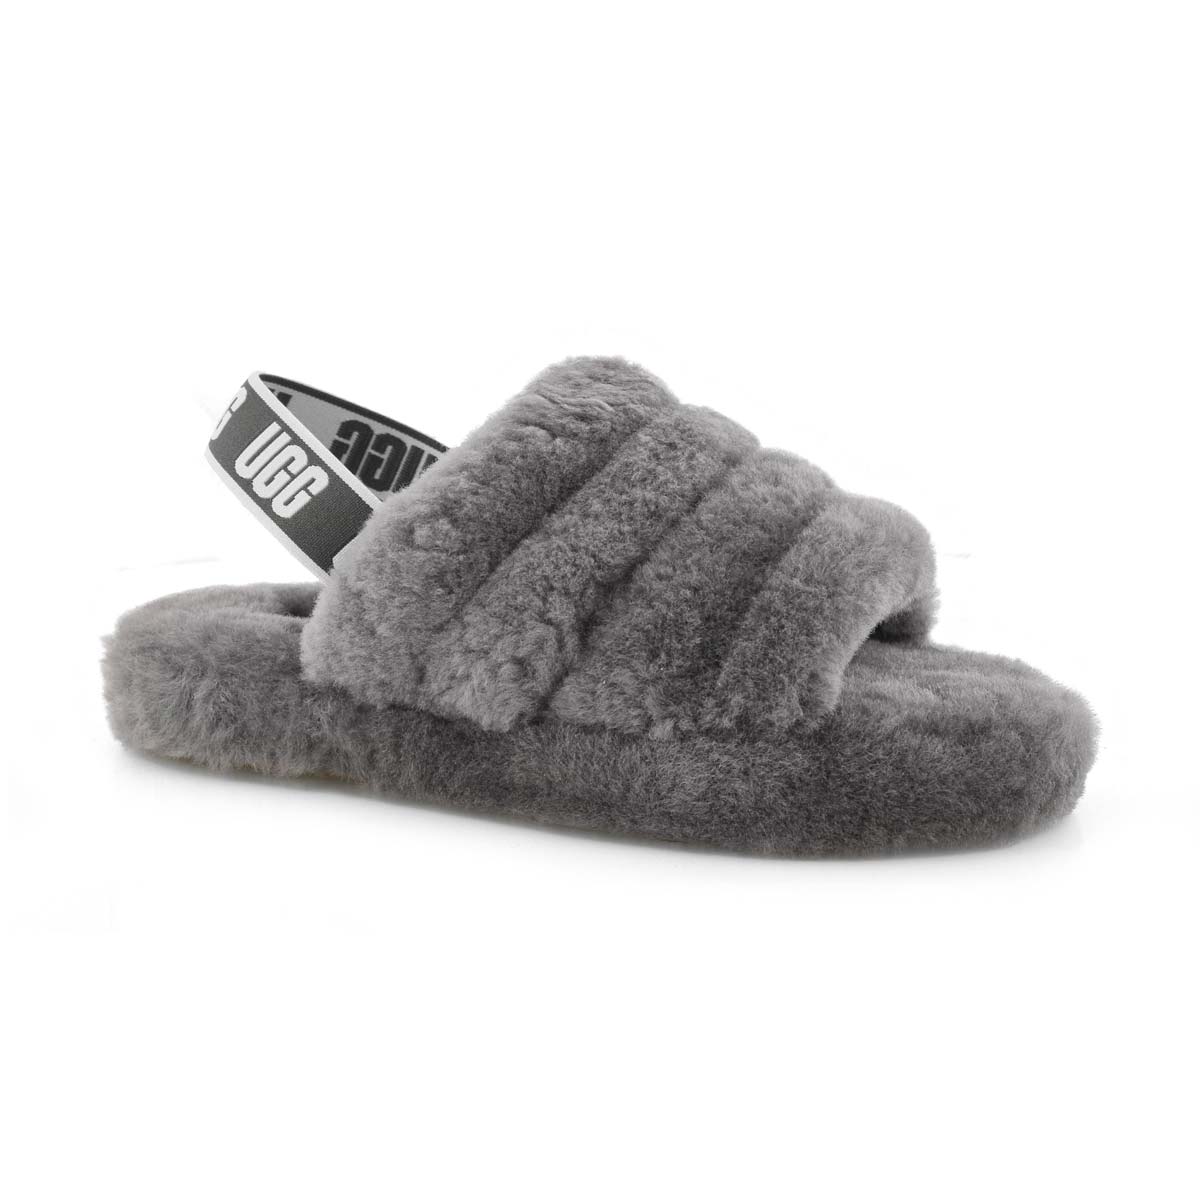 softmoc ugg slippers